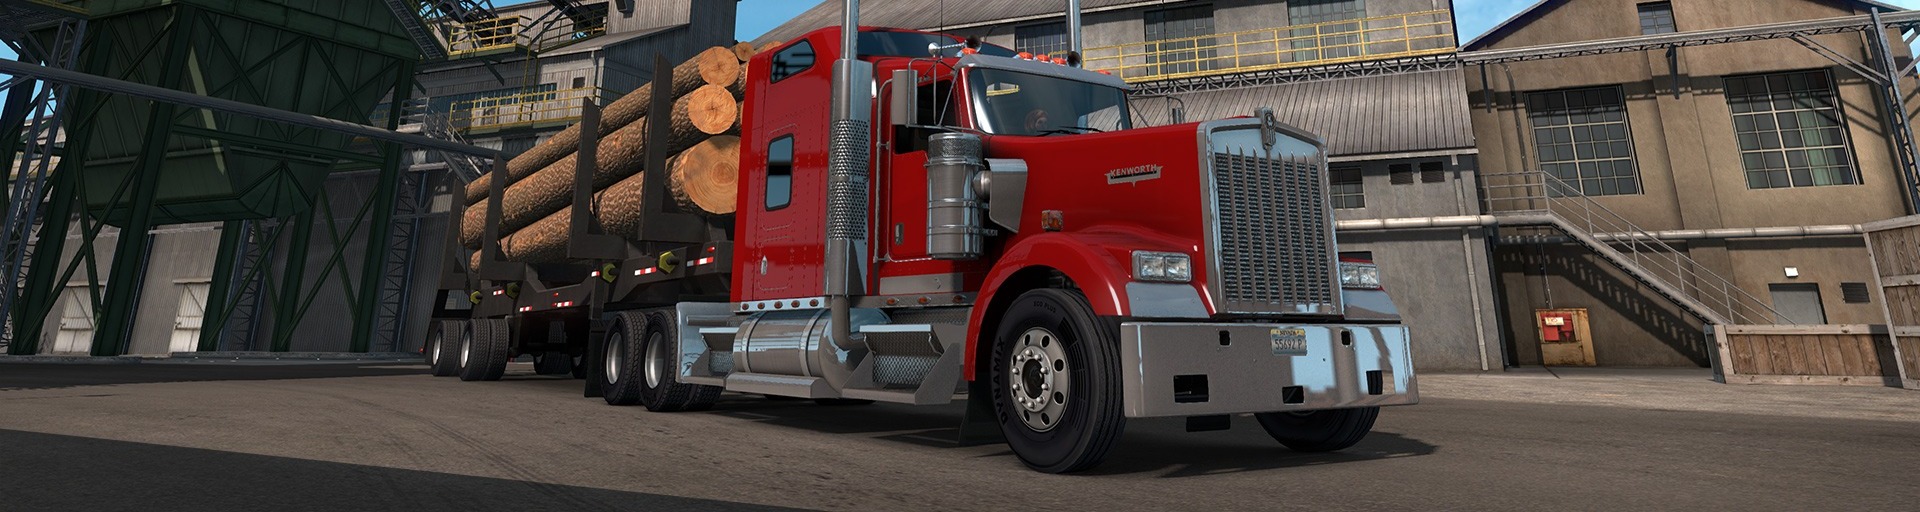 American Truck Simulator - Oregon bg